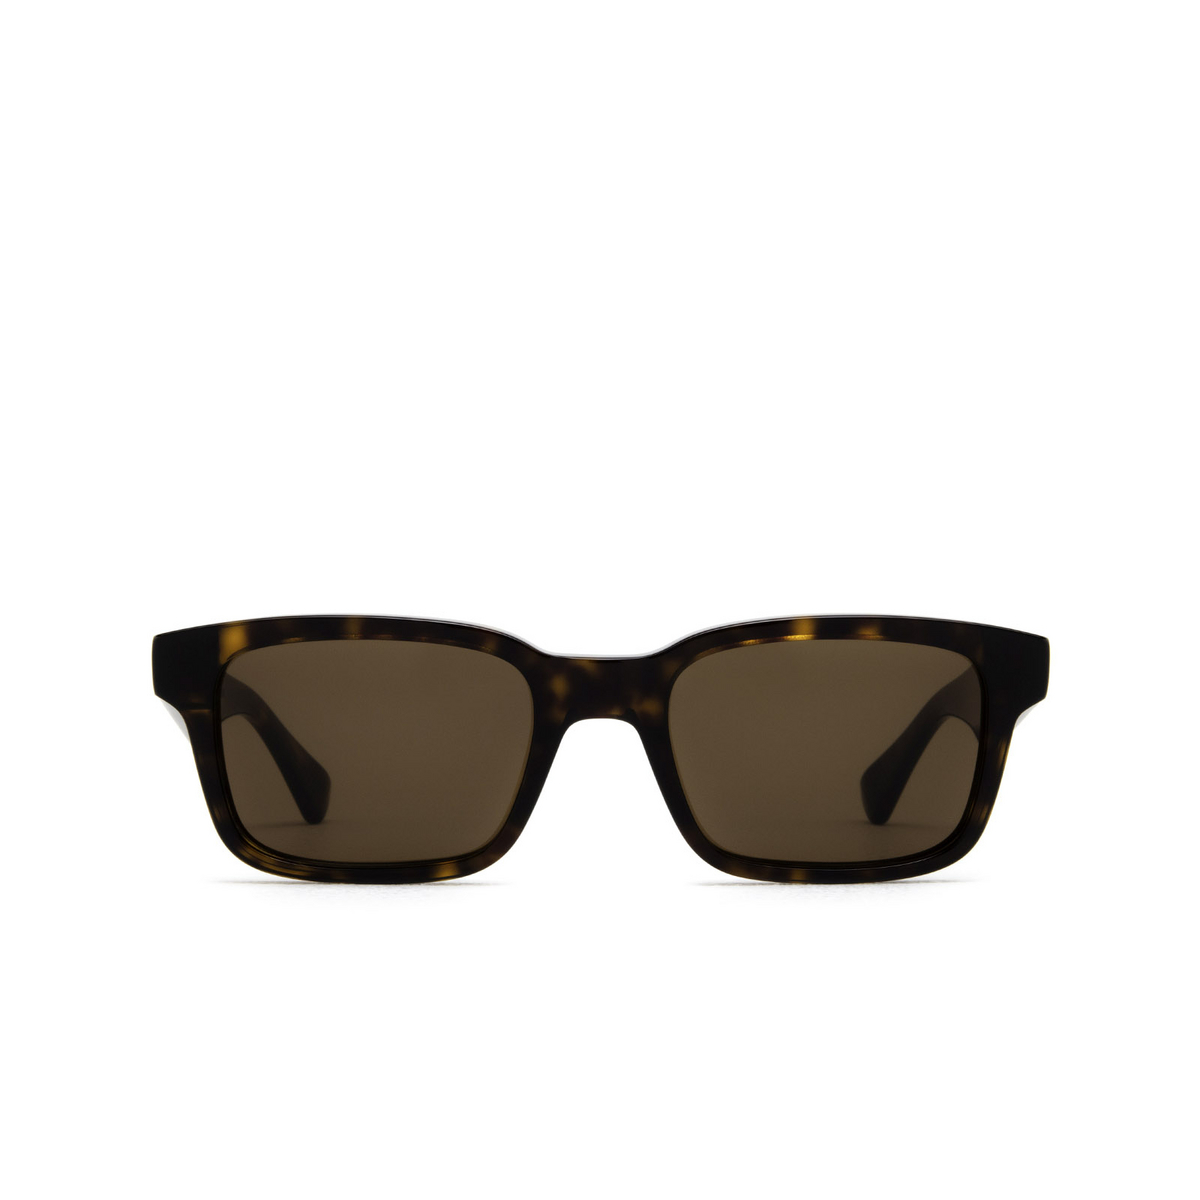 Bottega Veneta® Rectangle Sunglasses: BV1146S color Havana 002 - front view.